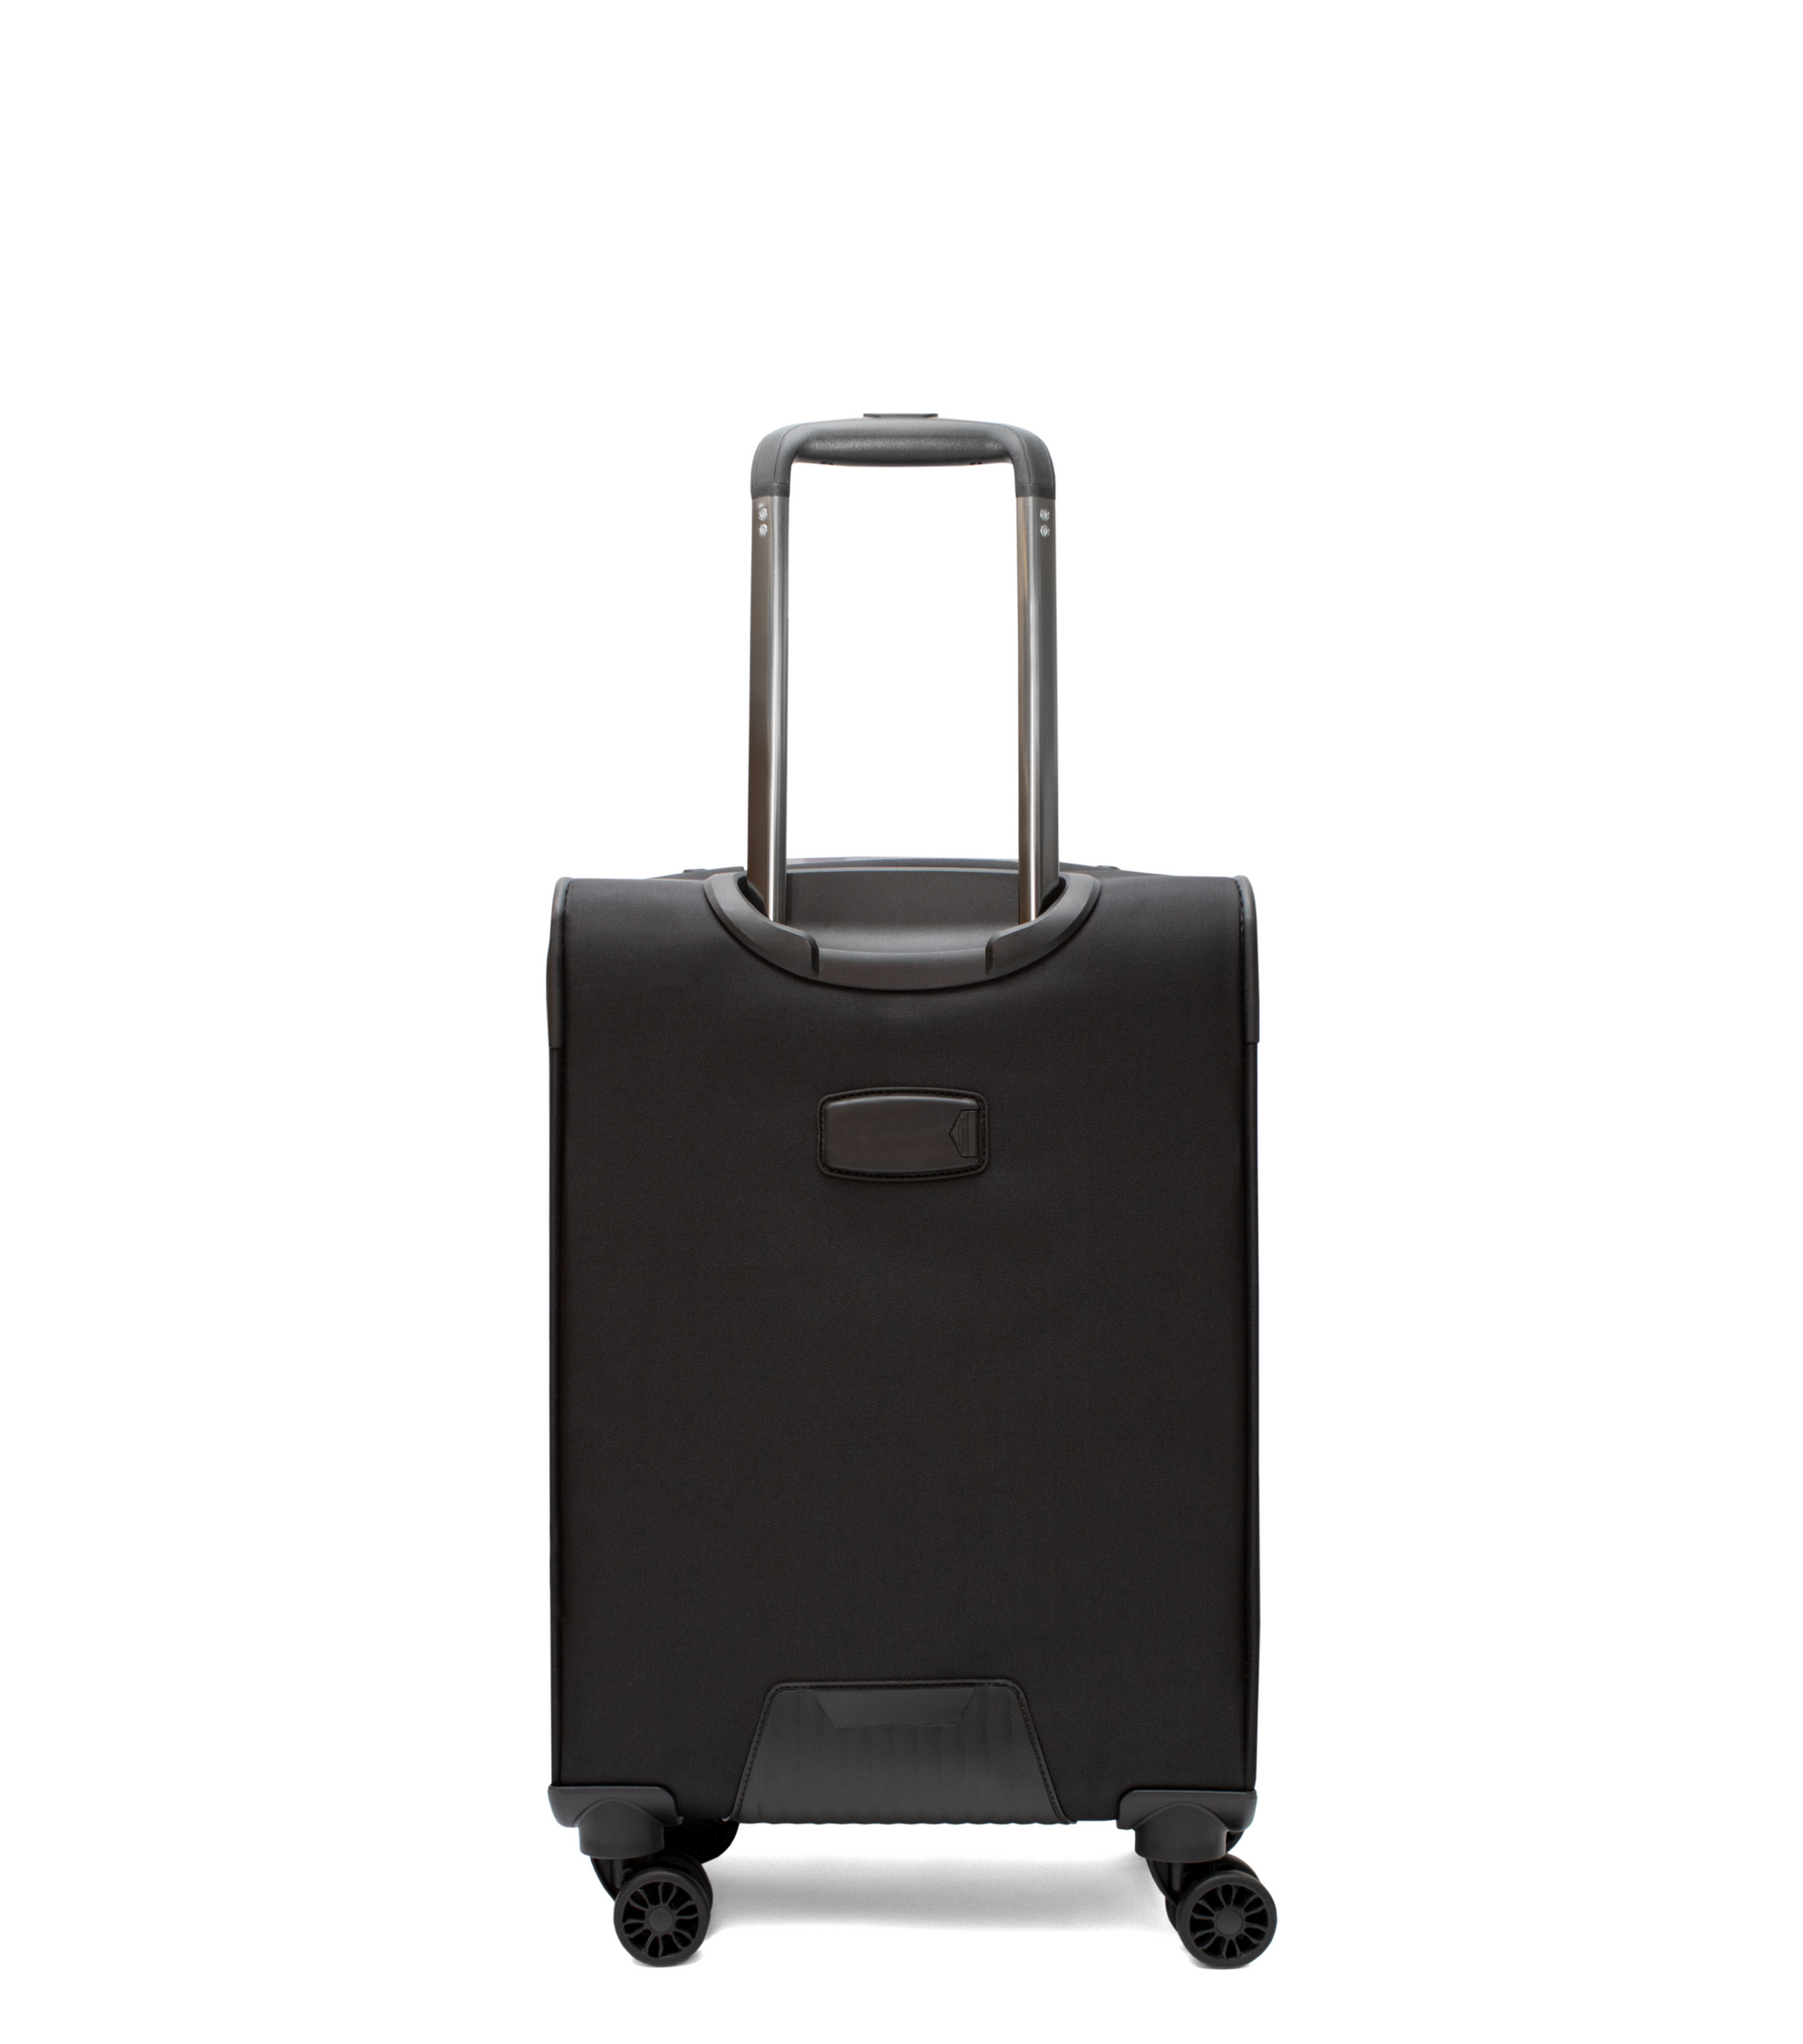 Cavalinho Carry-on Softside Cabin Luggage (16" or 19") - 19 inch Black - 68020003.01.19_3_3cb4b4c7-1f0a-4605-817f-e196a0e02b1e